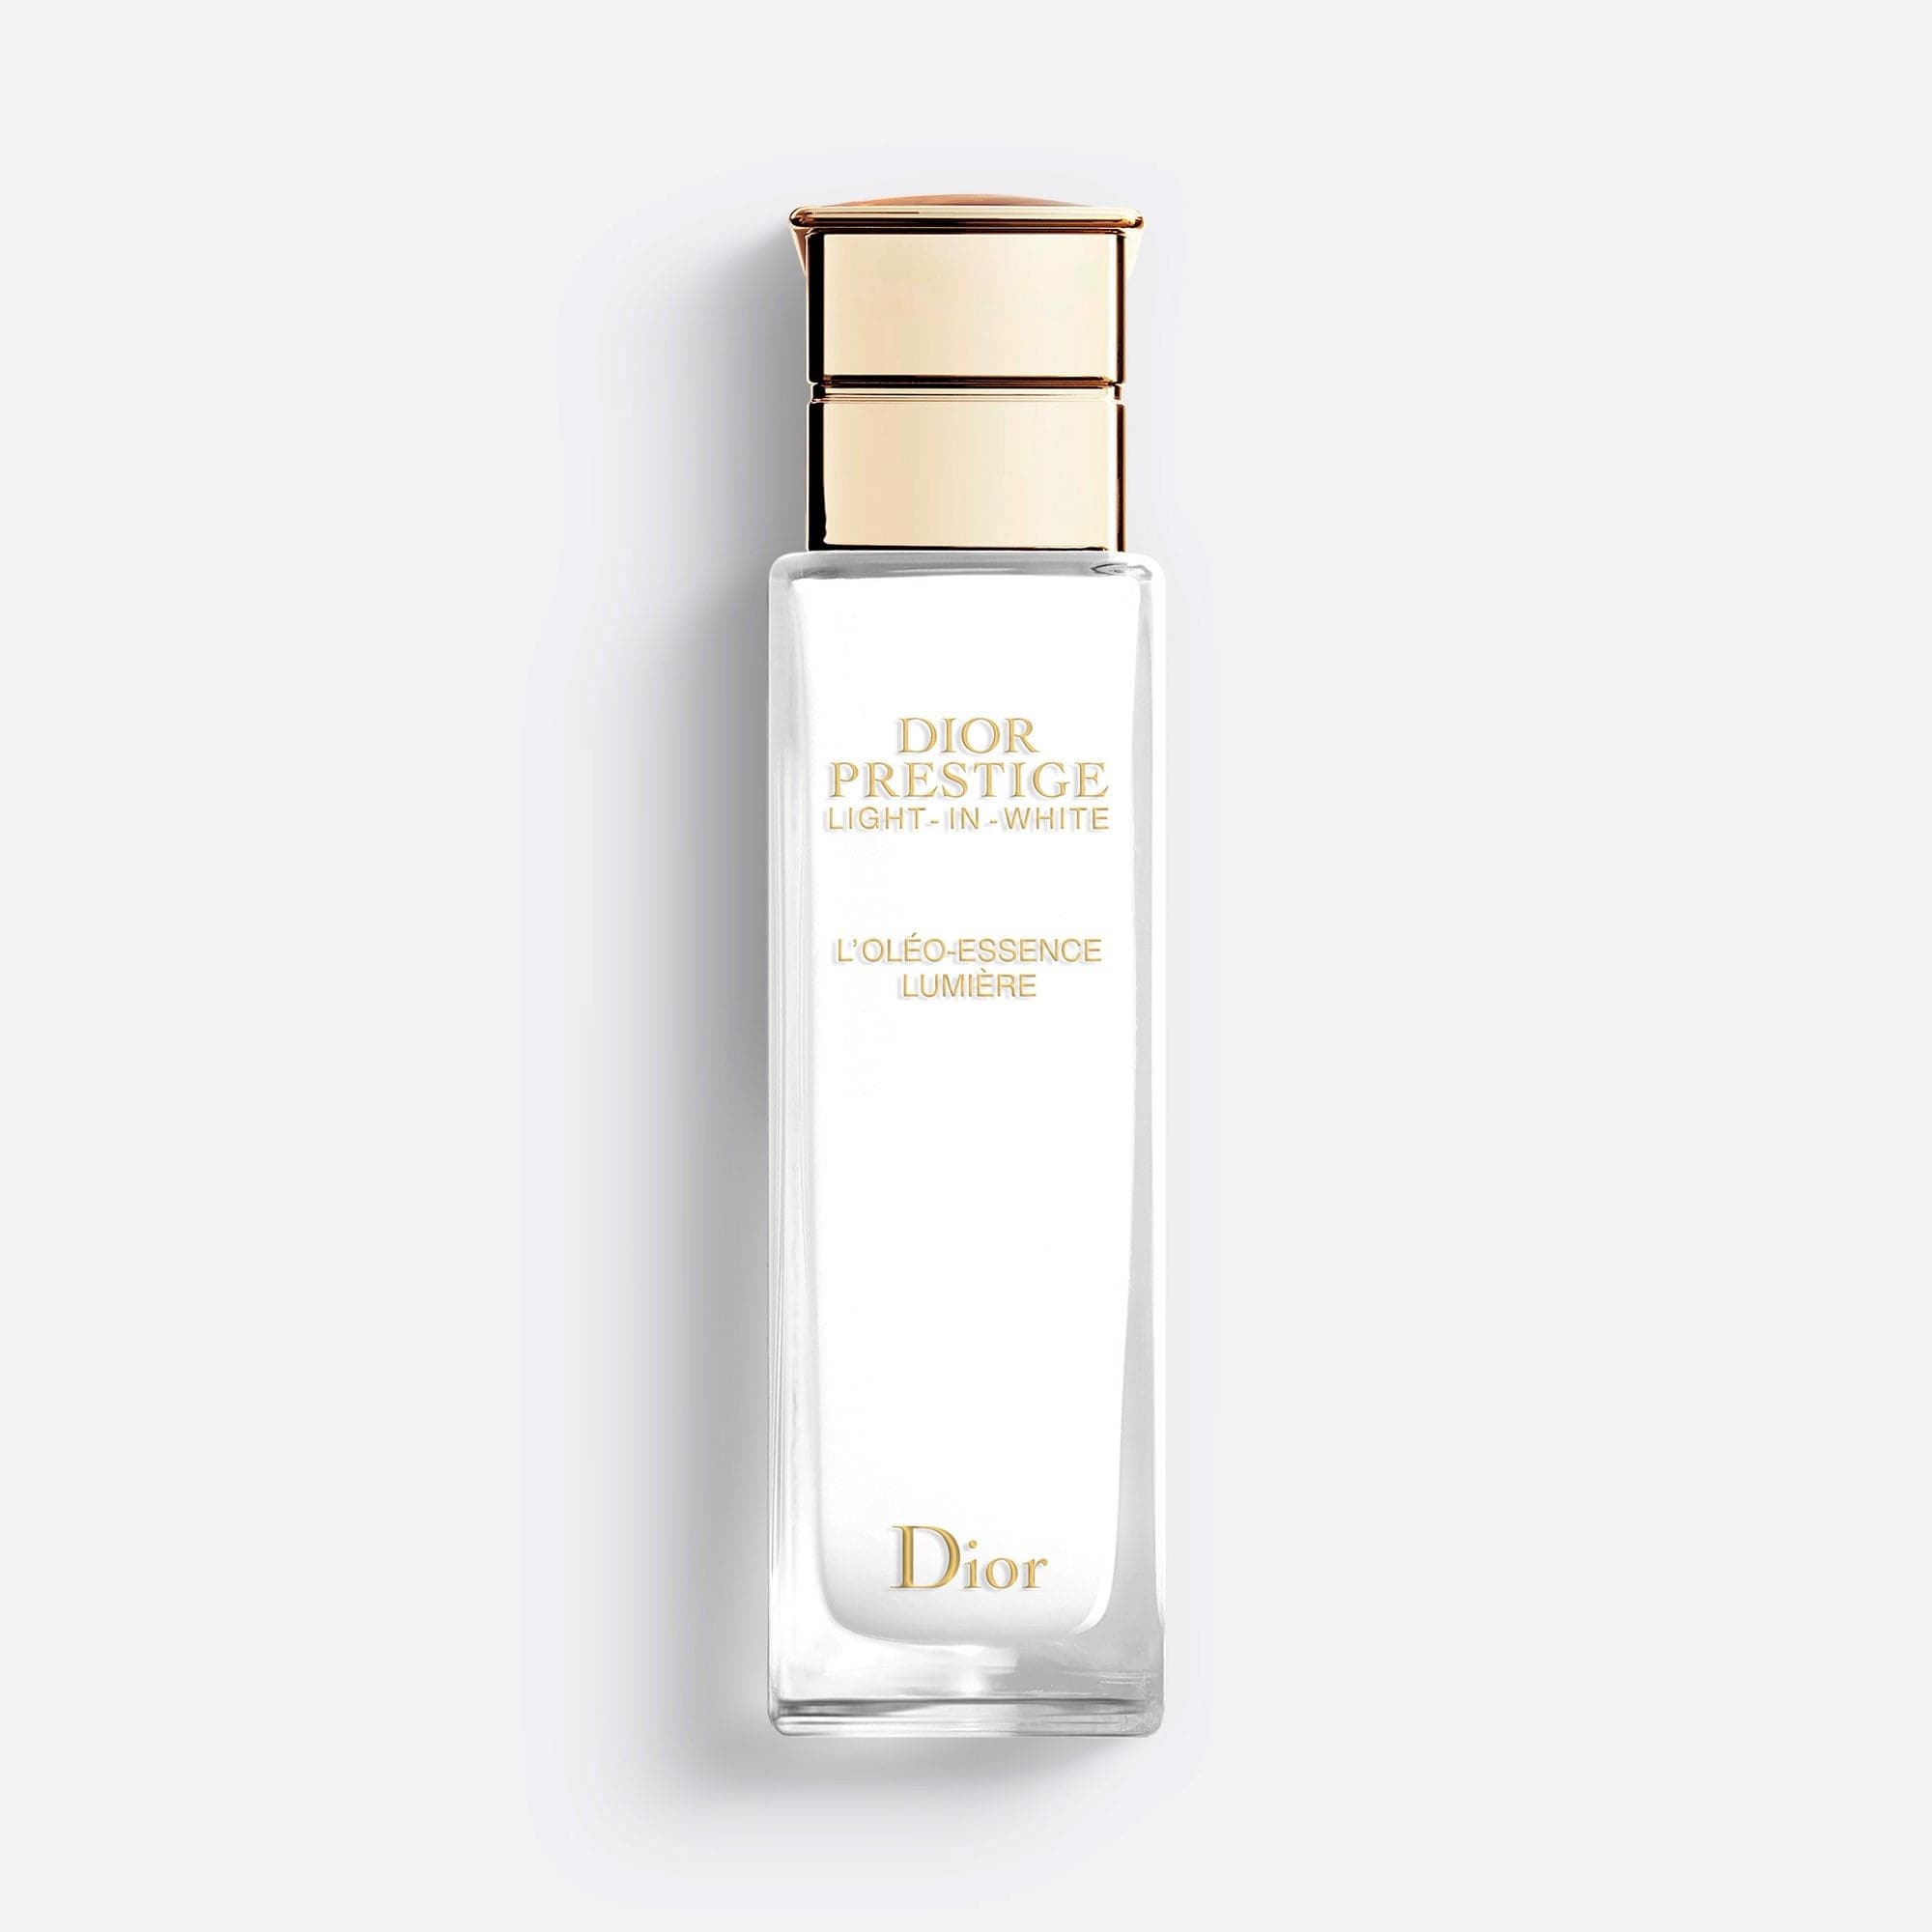 Dior Prestige Light-in-White L'Oléo-Essence Lumière | Dior Beauty HK